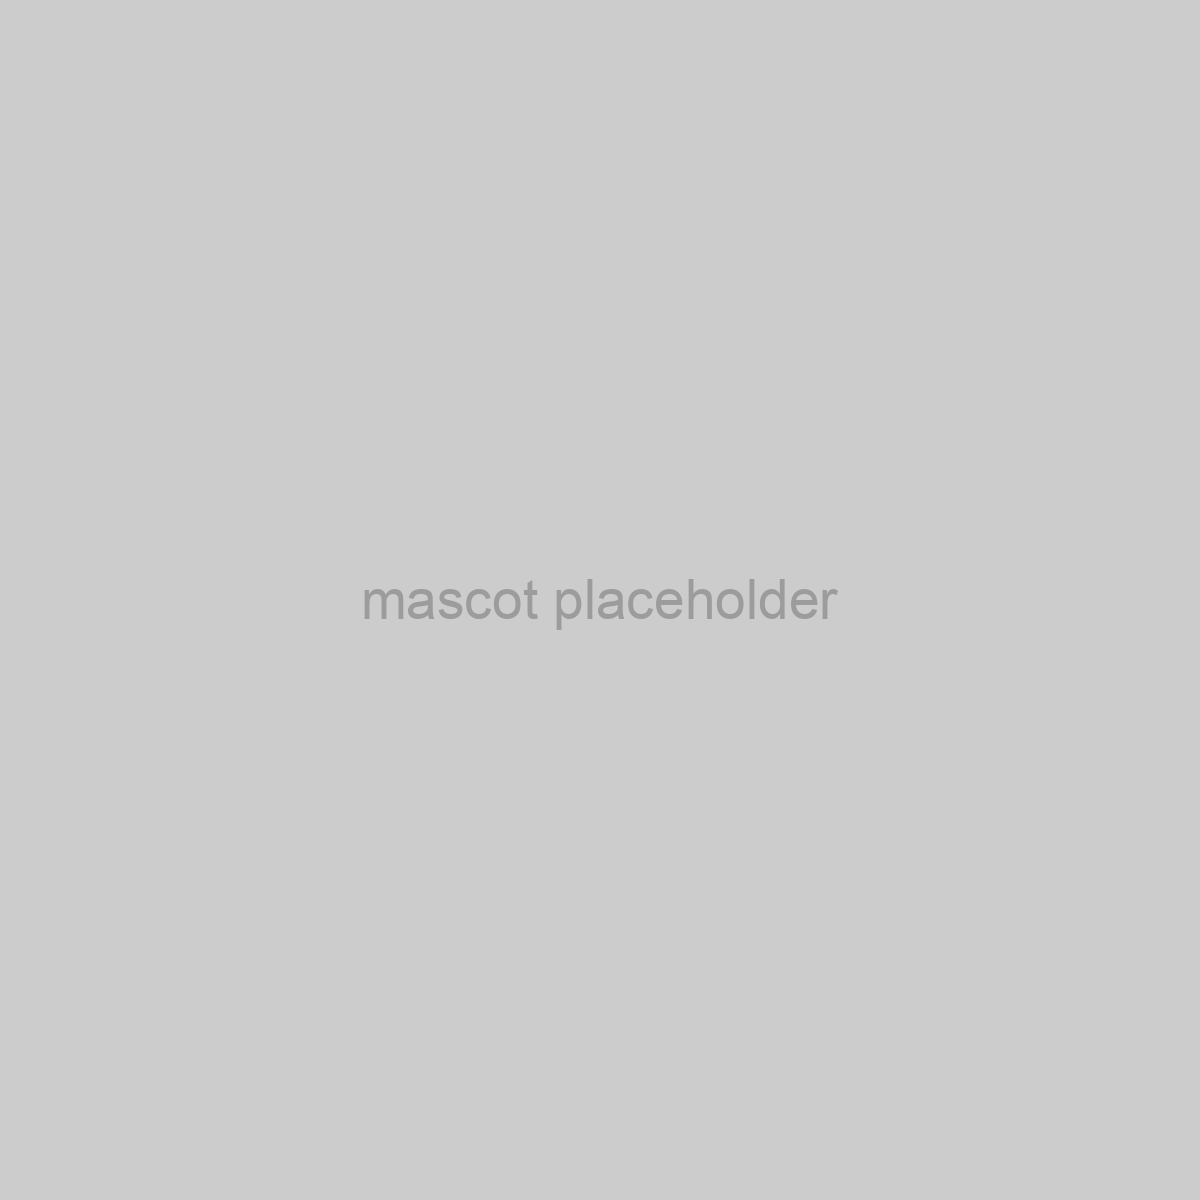 mascot Placeholder Image